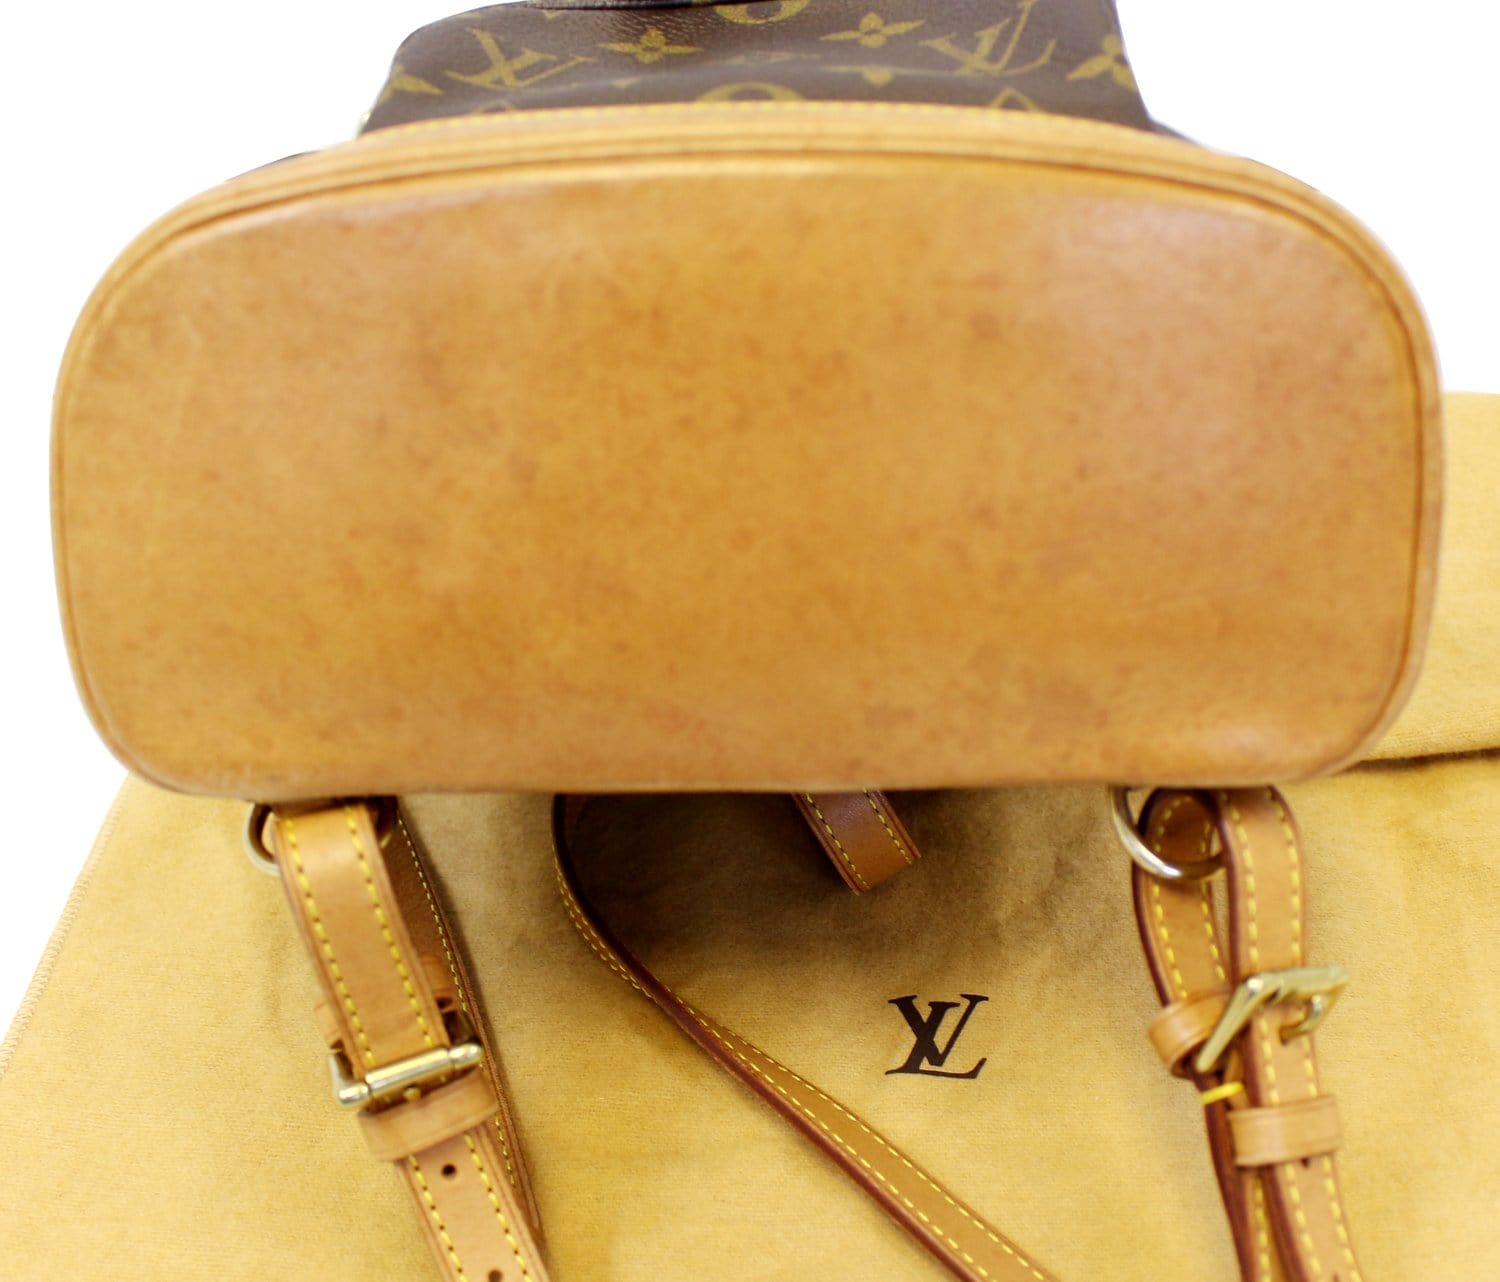 Louis Vuitton Trio Backpack Monogram Brown  Louis vuitton backpack, Louis  vuitton handbags, Vuitton